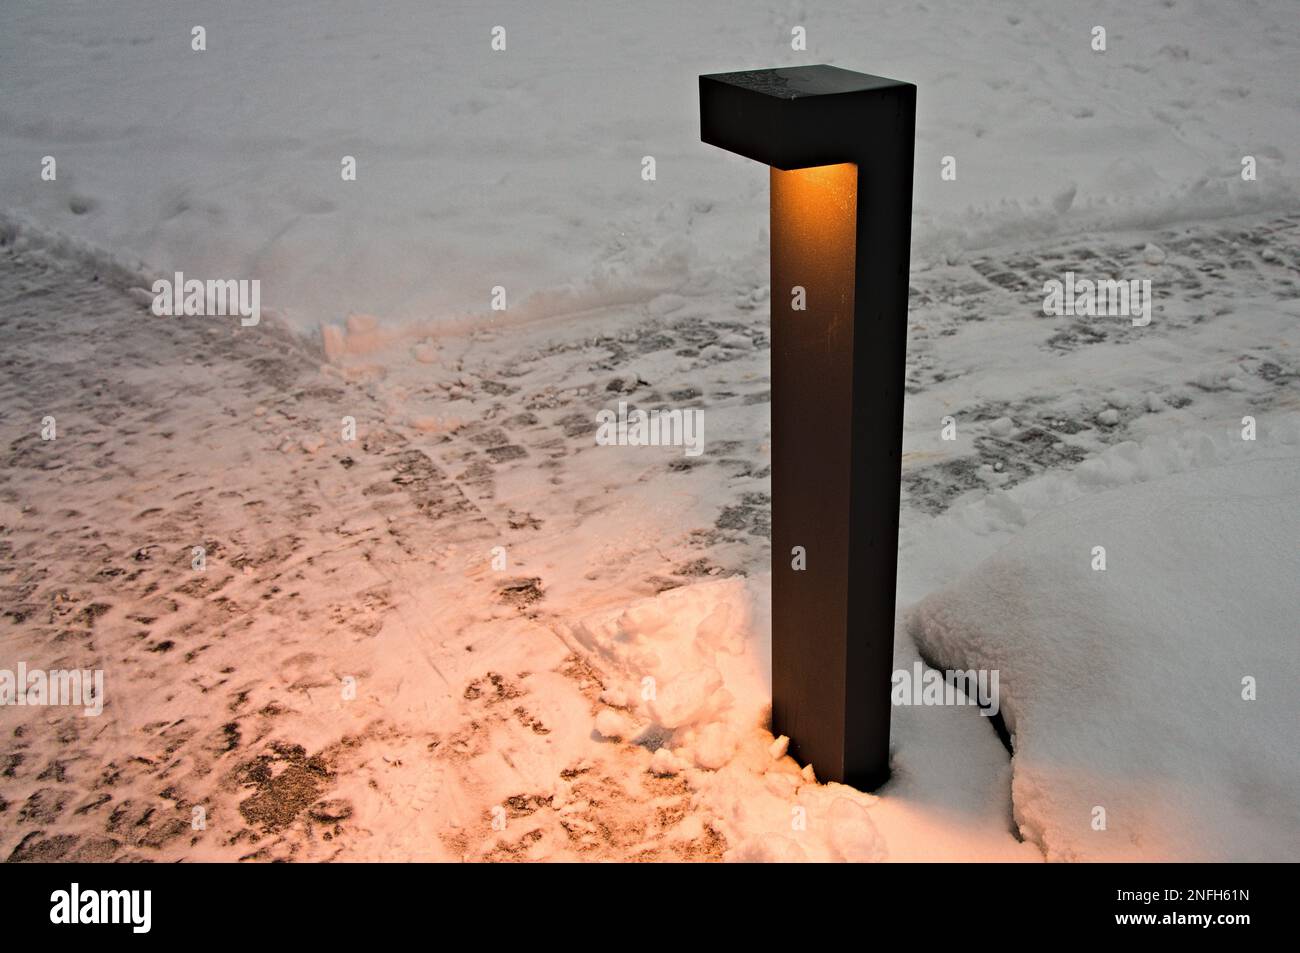 Metalic lamp illuminates snowy cobbles Stock Photo